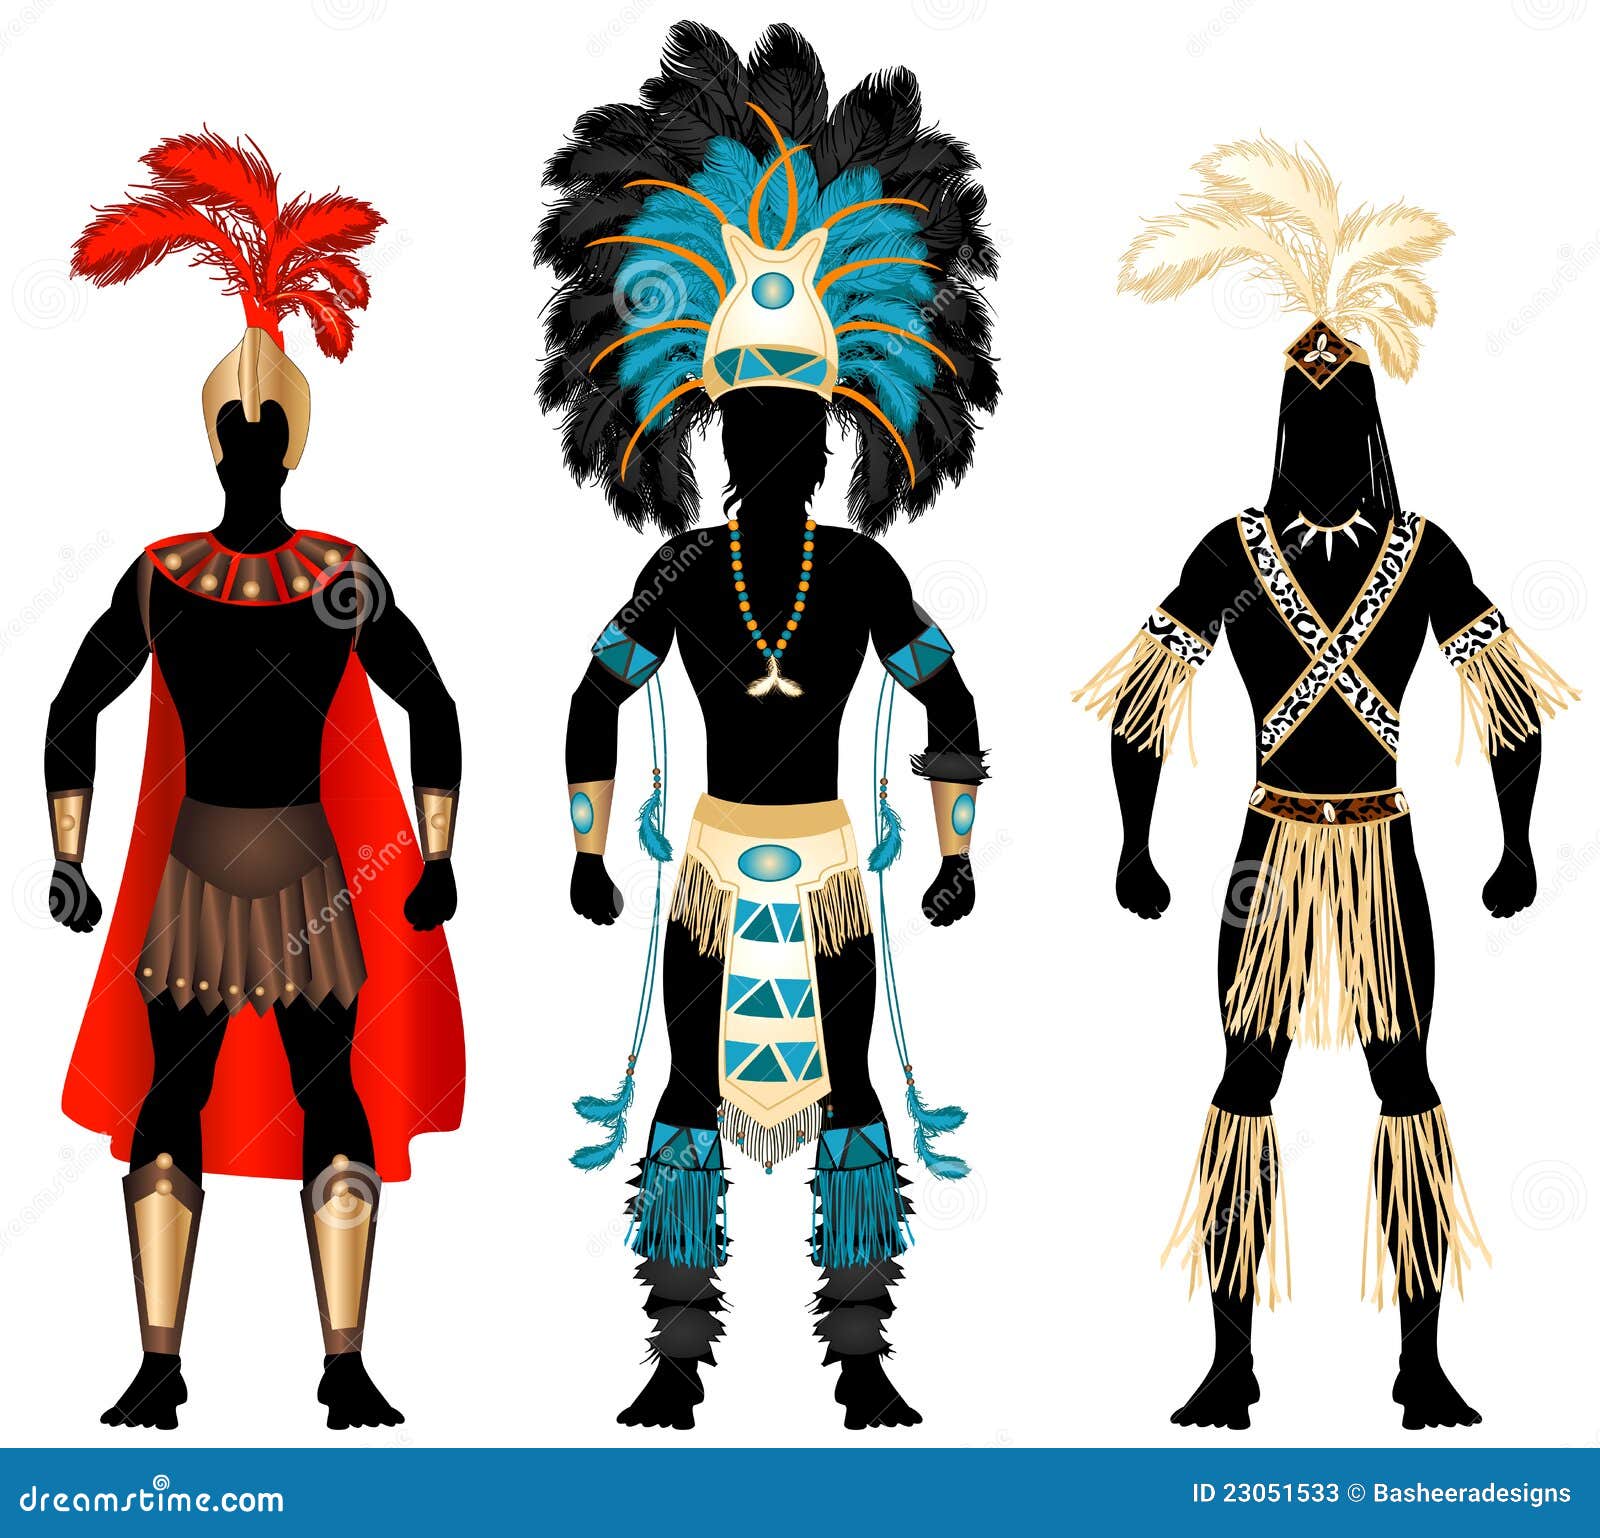 male carnival costumes